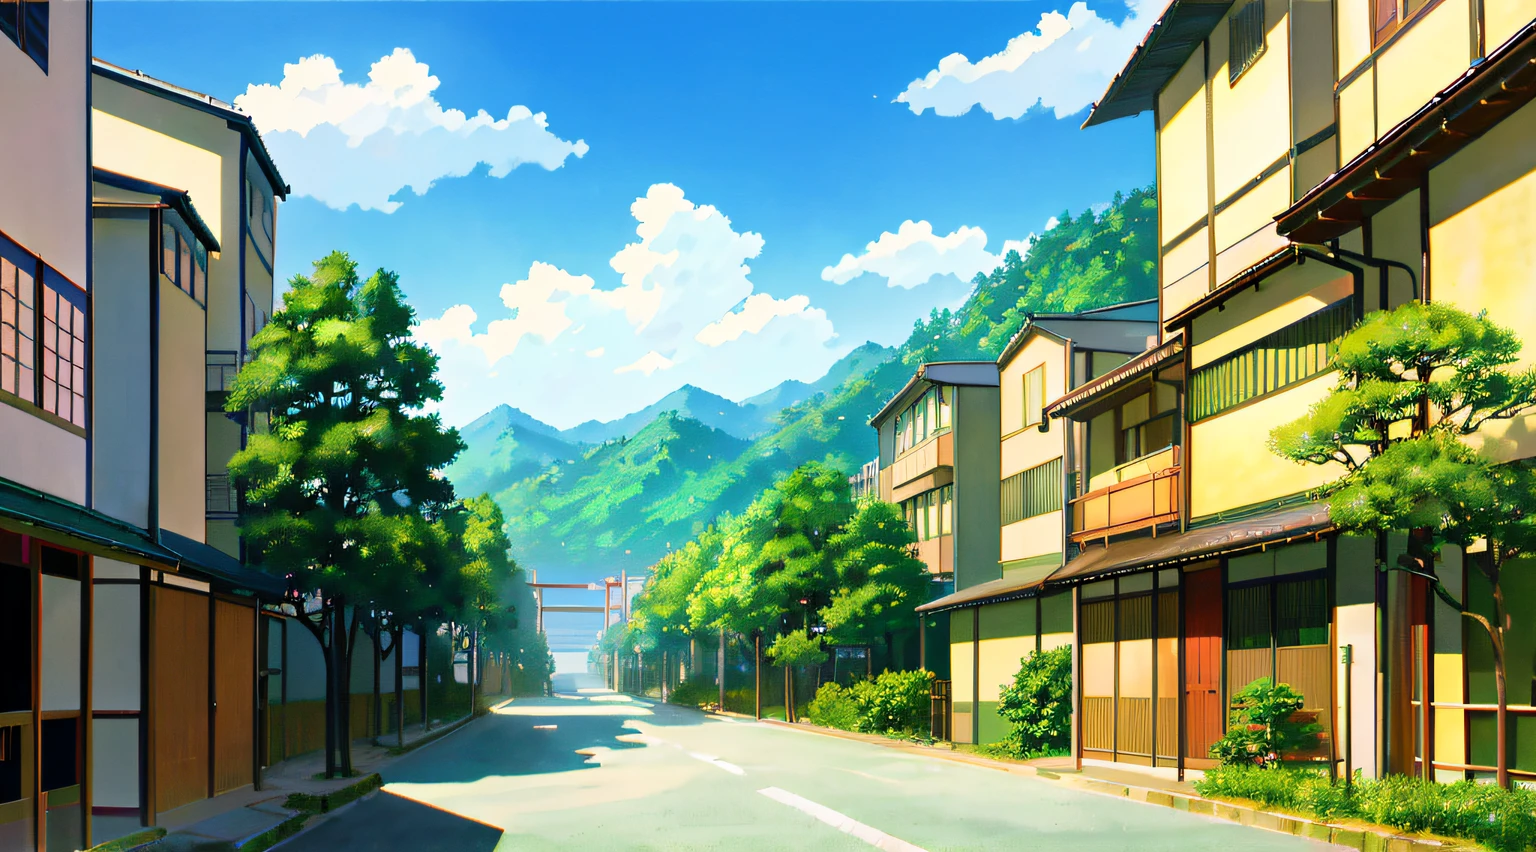 Ghibli My Neighbor Totoro Anime iPhone 6 Wallpapers / IPod ... Desktop  Background